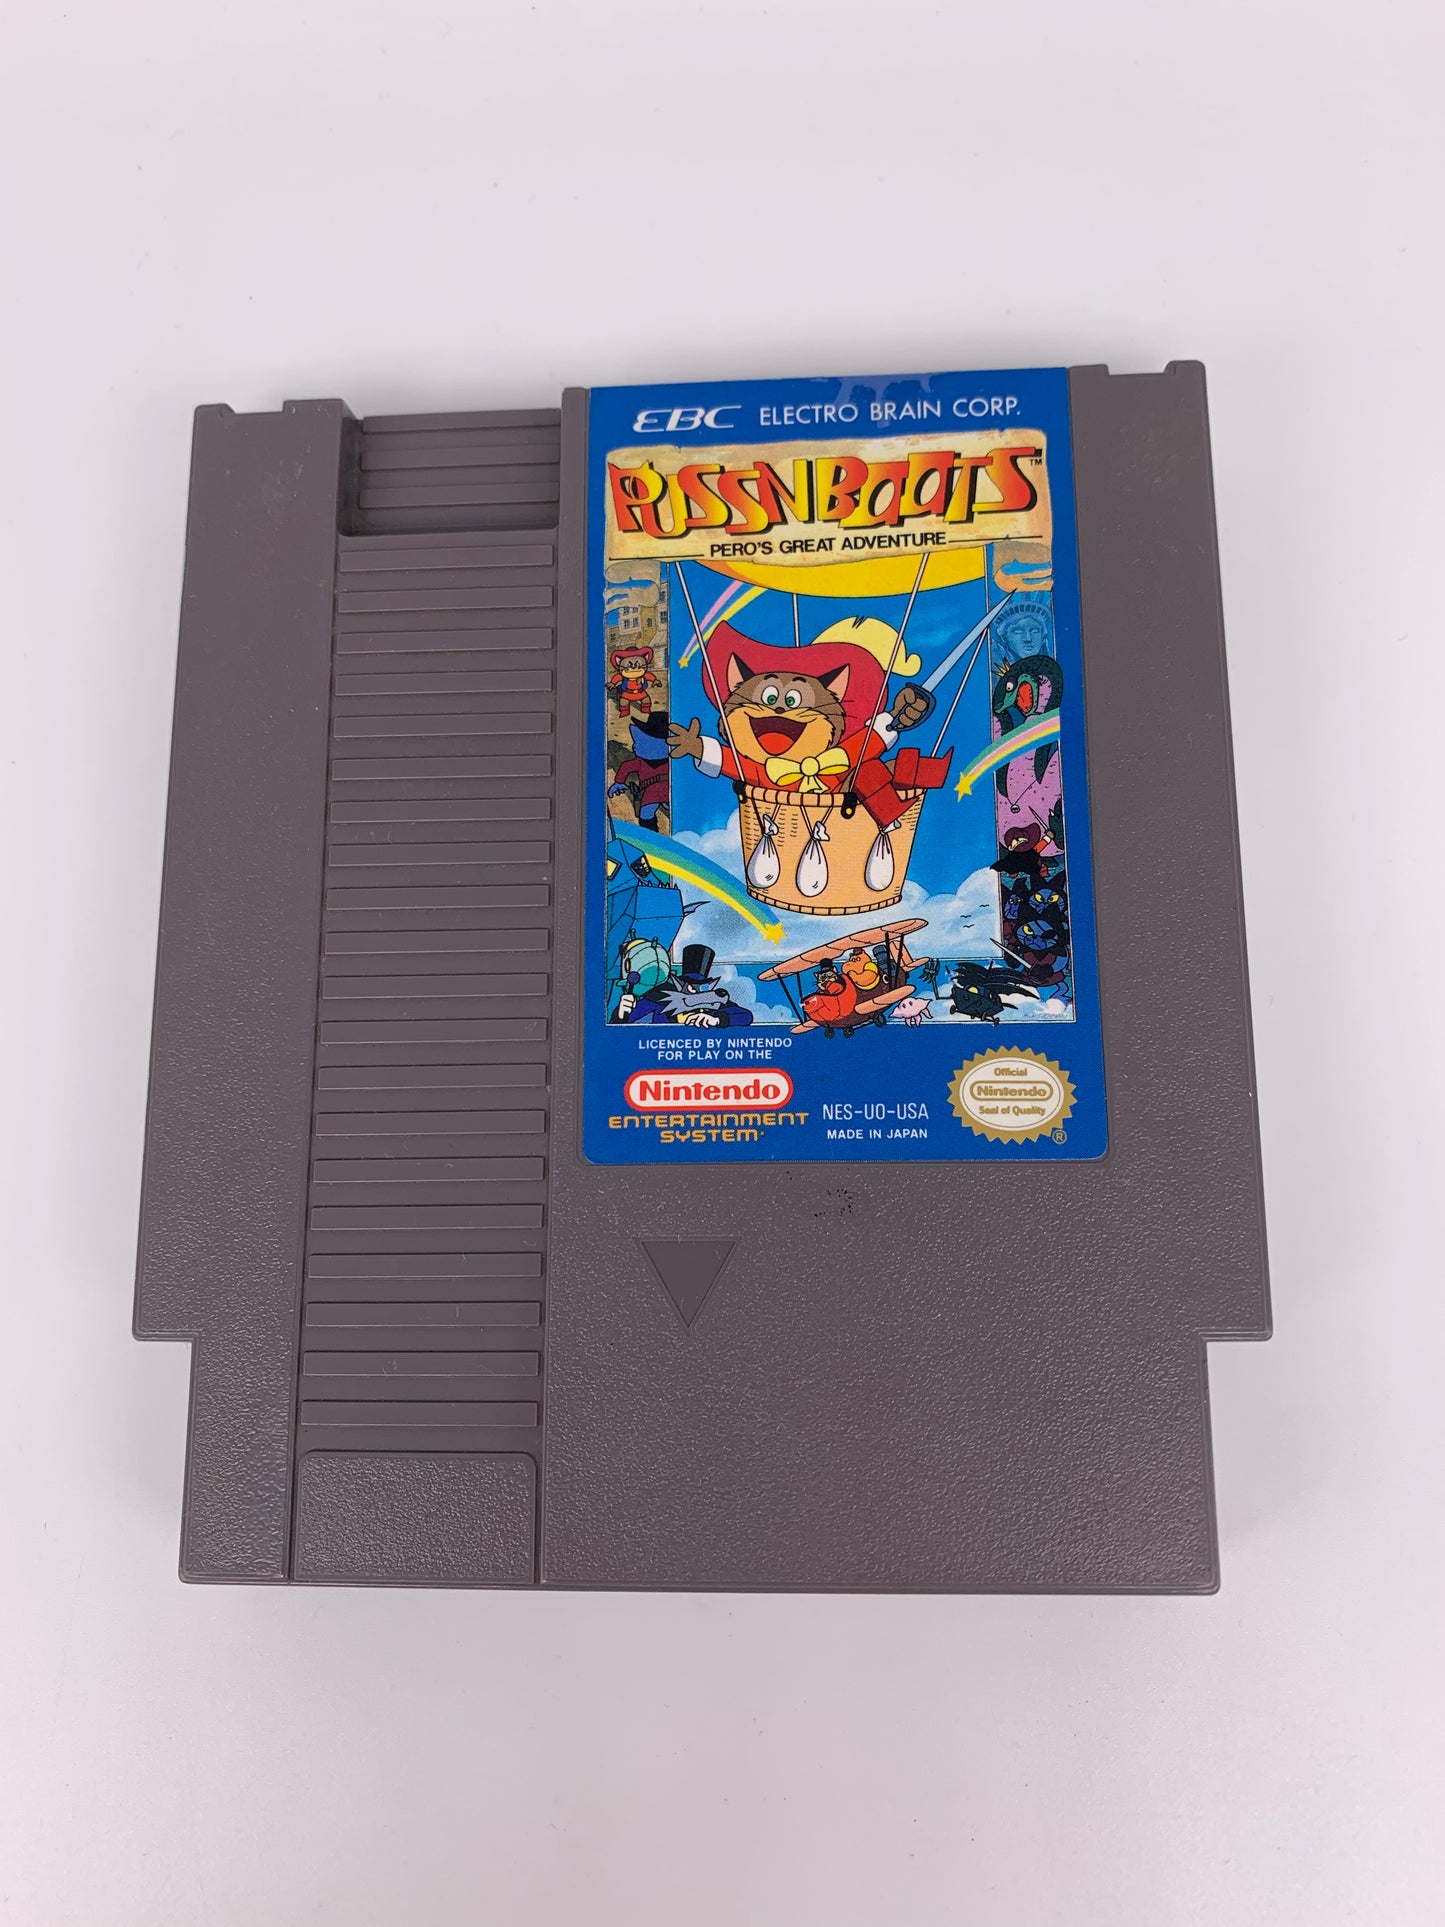 PiXEL-RETRO.COM : NINTENDO NES GAME NTSC PUSS N BOOTS PERO'S GREAT ADVENTURE